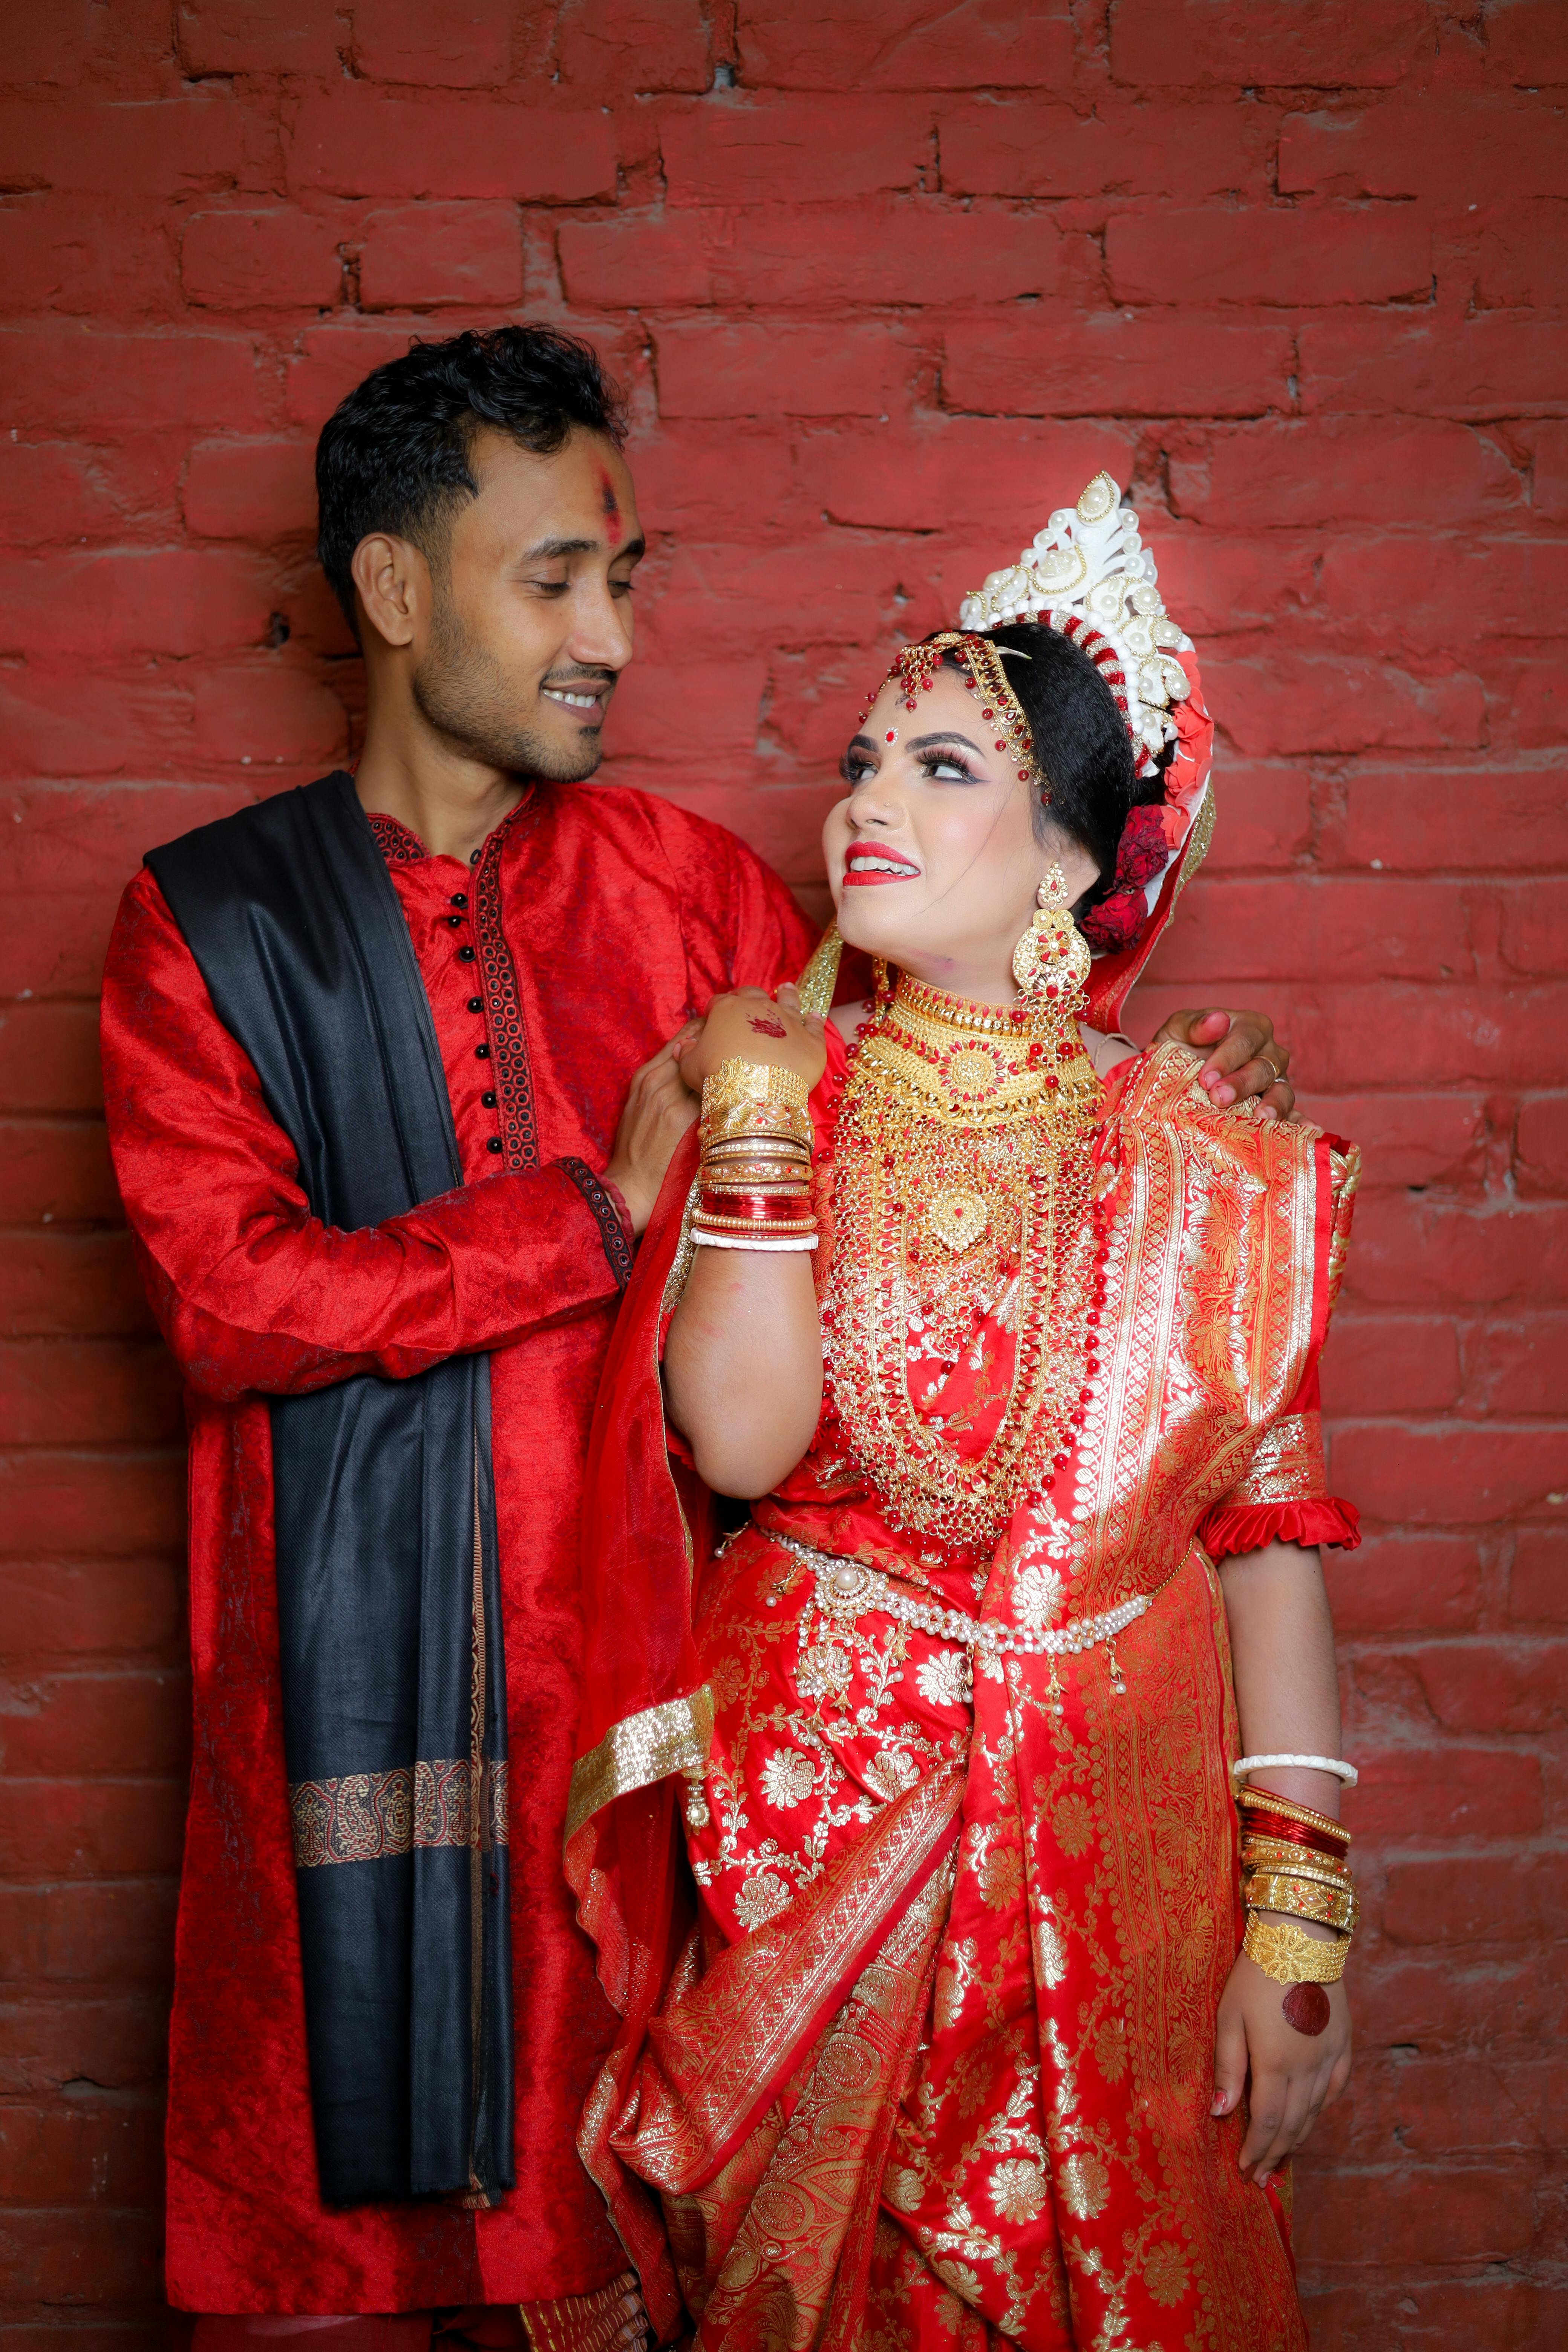 Red Indian Wedding Dress